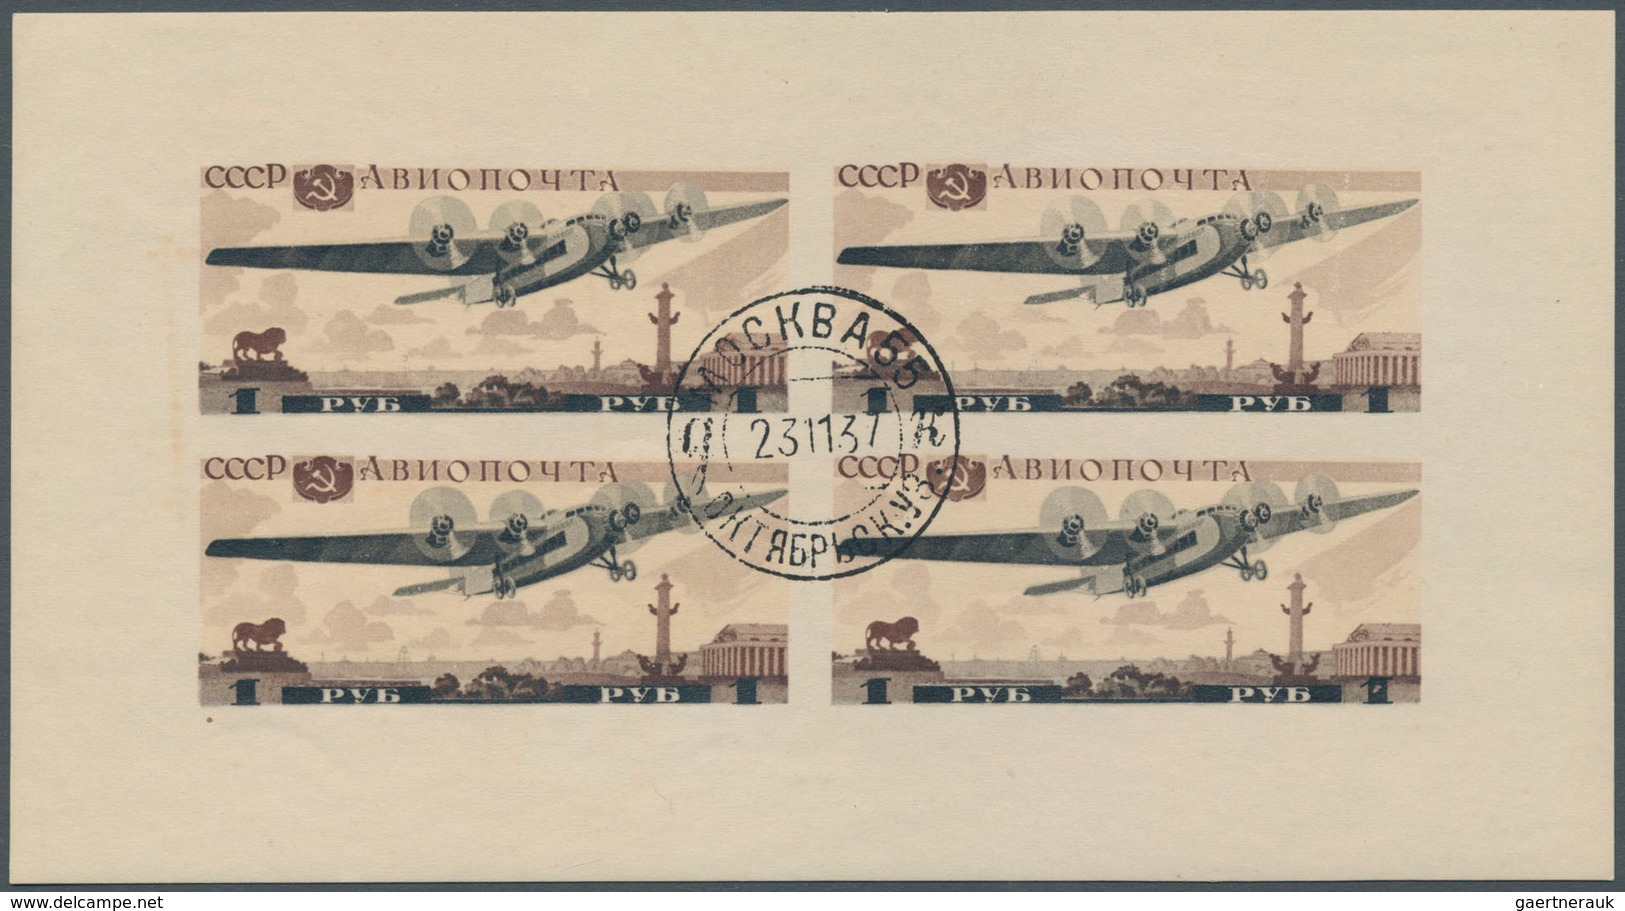 Sowjetunion: 1937 'Allunion' Souvenir Sheet, Cancelled "MOCKBA 55/23.11.37" Cds, Fine. (Mi. 600 €) - Gebruikt